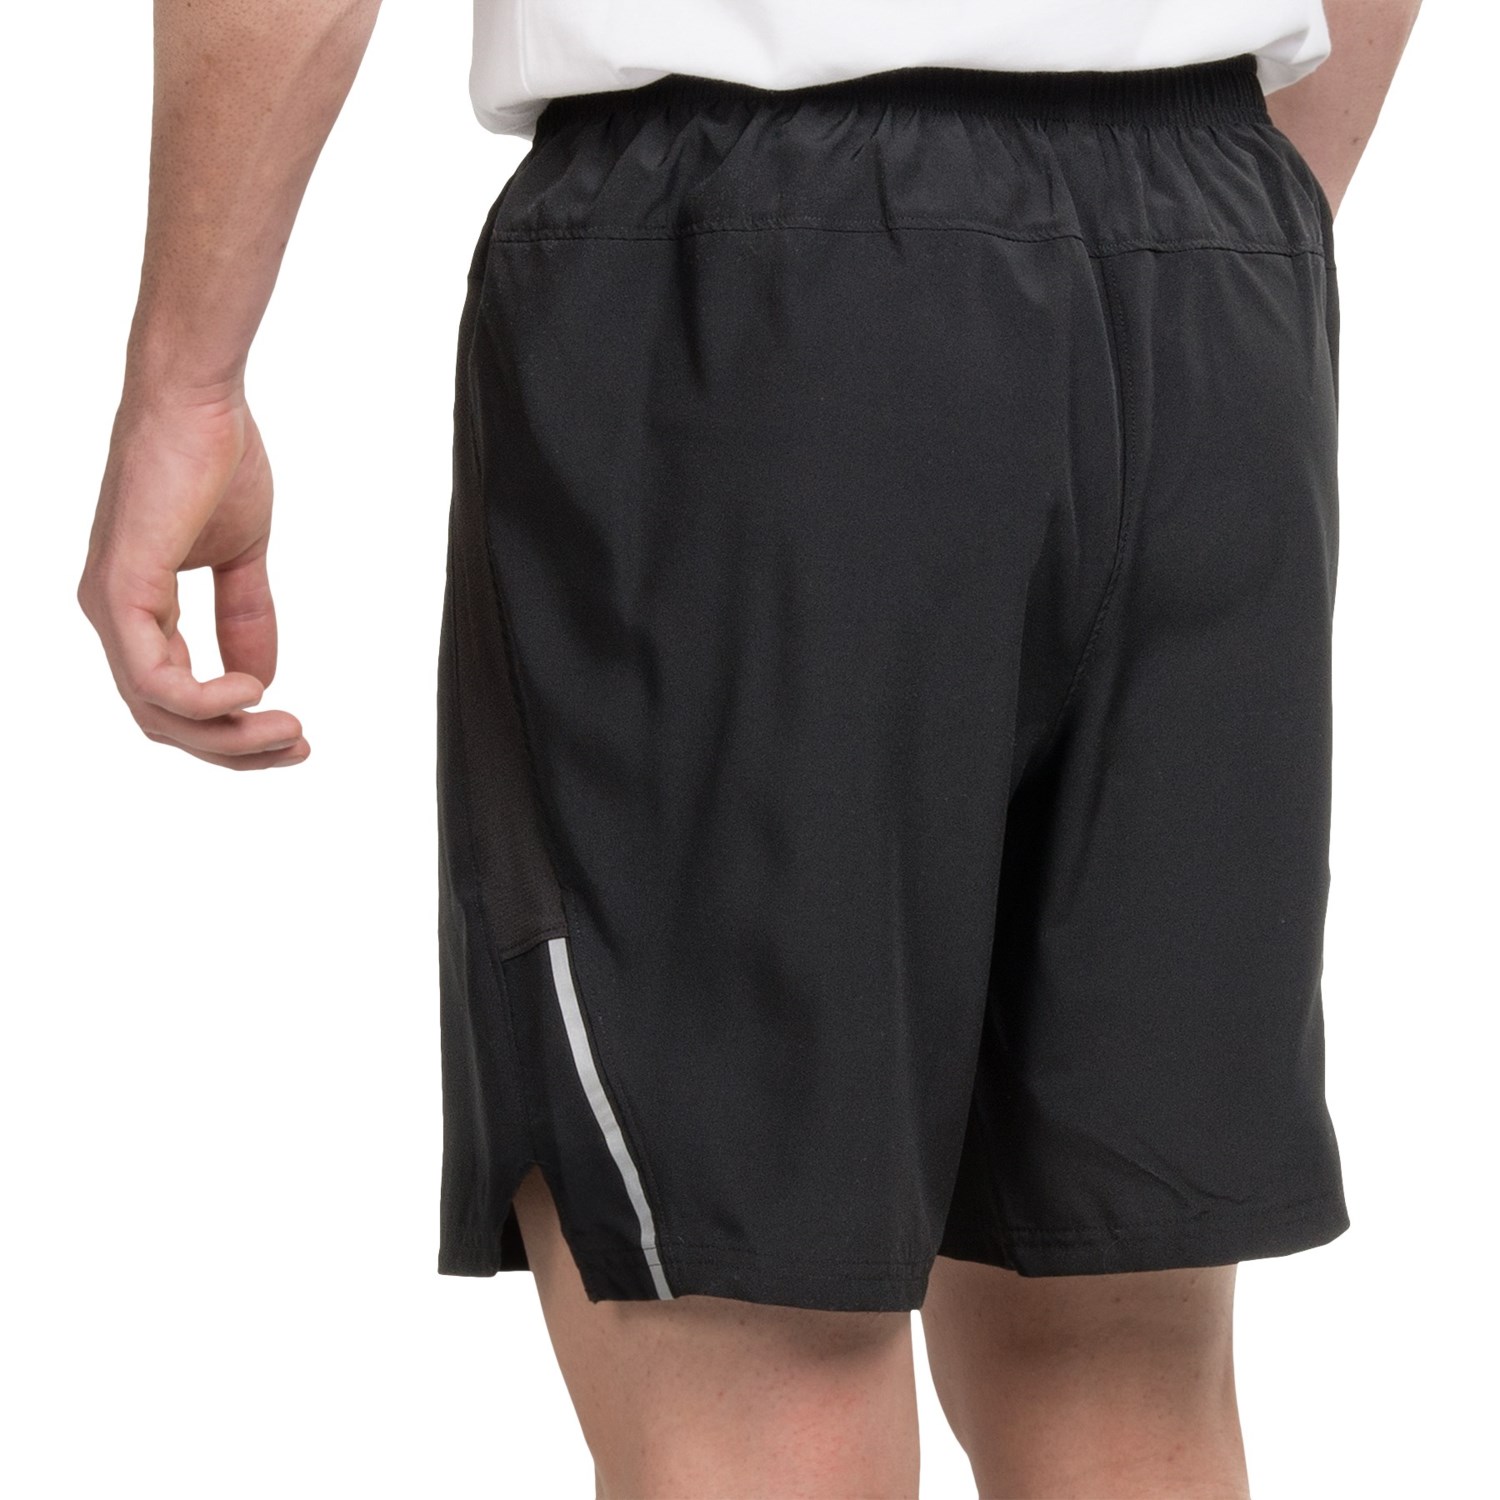 New Balance 7” Woven Running Shorts (For Men) - Save 71%